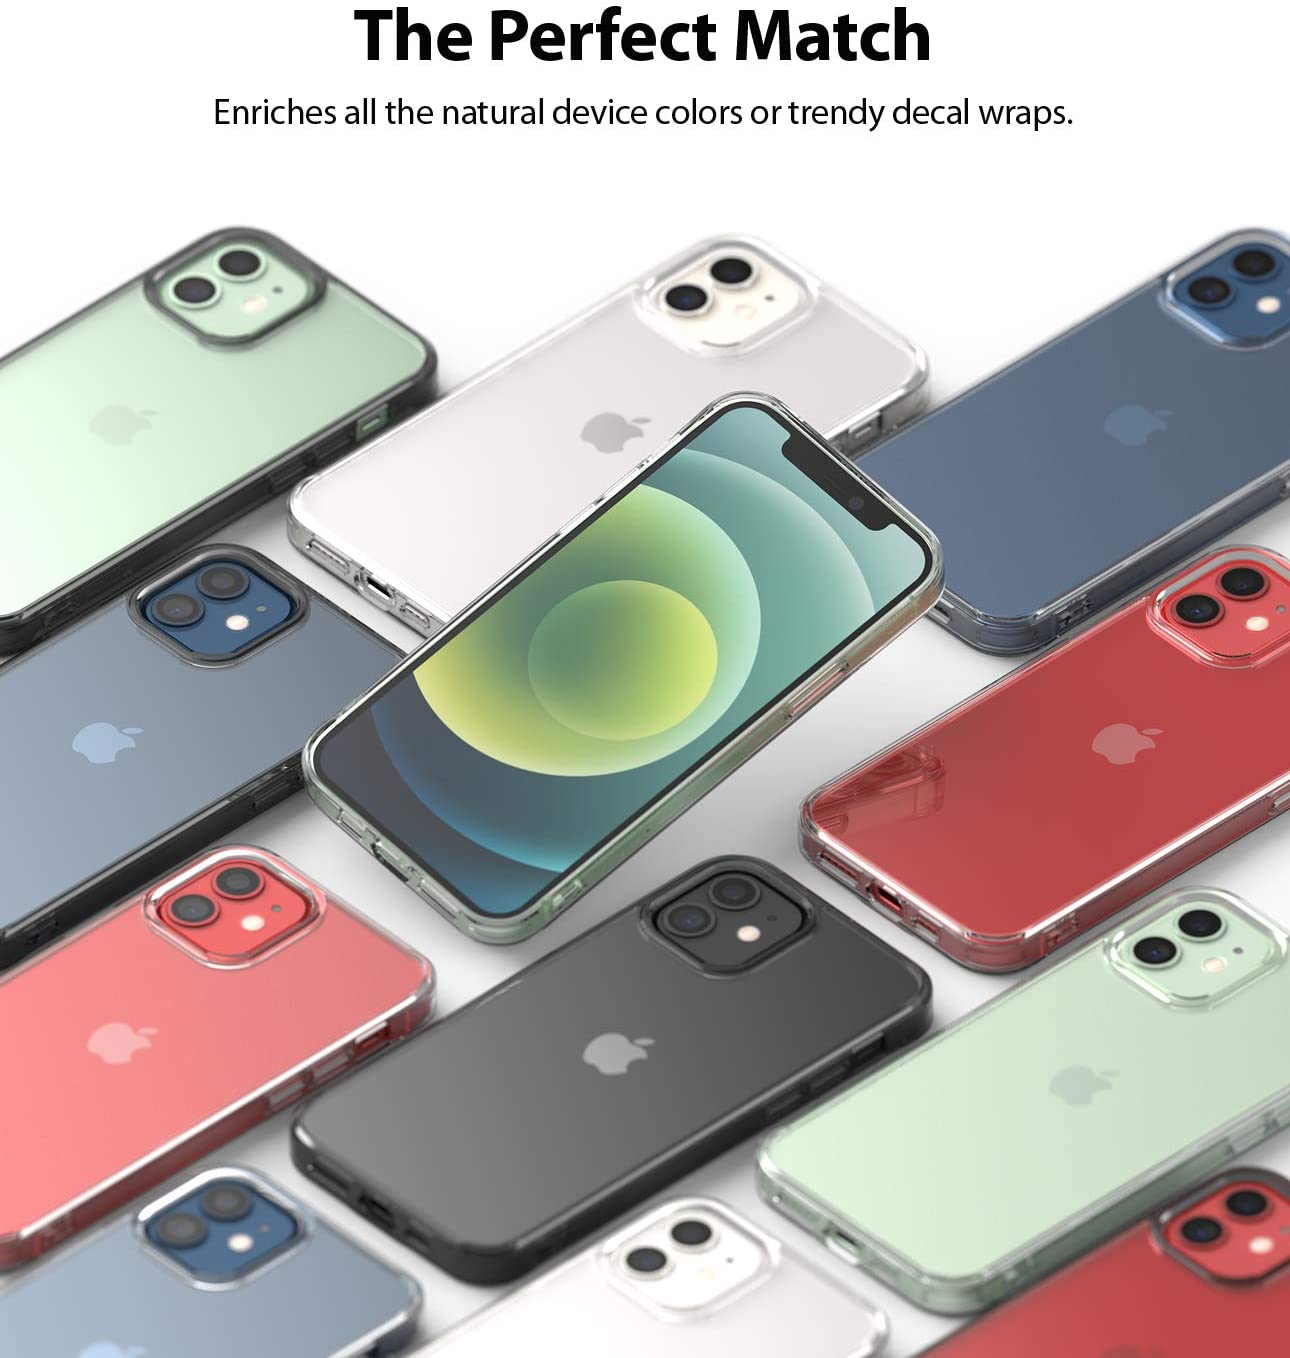 Ringke Fusion Matte iPhone 12 / Pro / Pro Max / Mini Case Translucent Satin Texture Anti Scratch TPU Bumper Cover Frost Clear